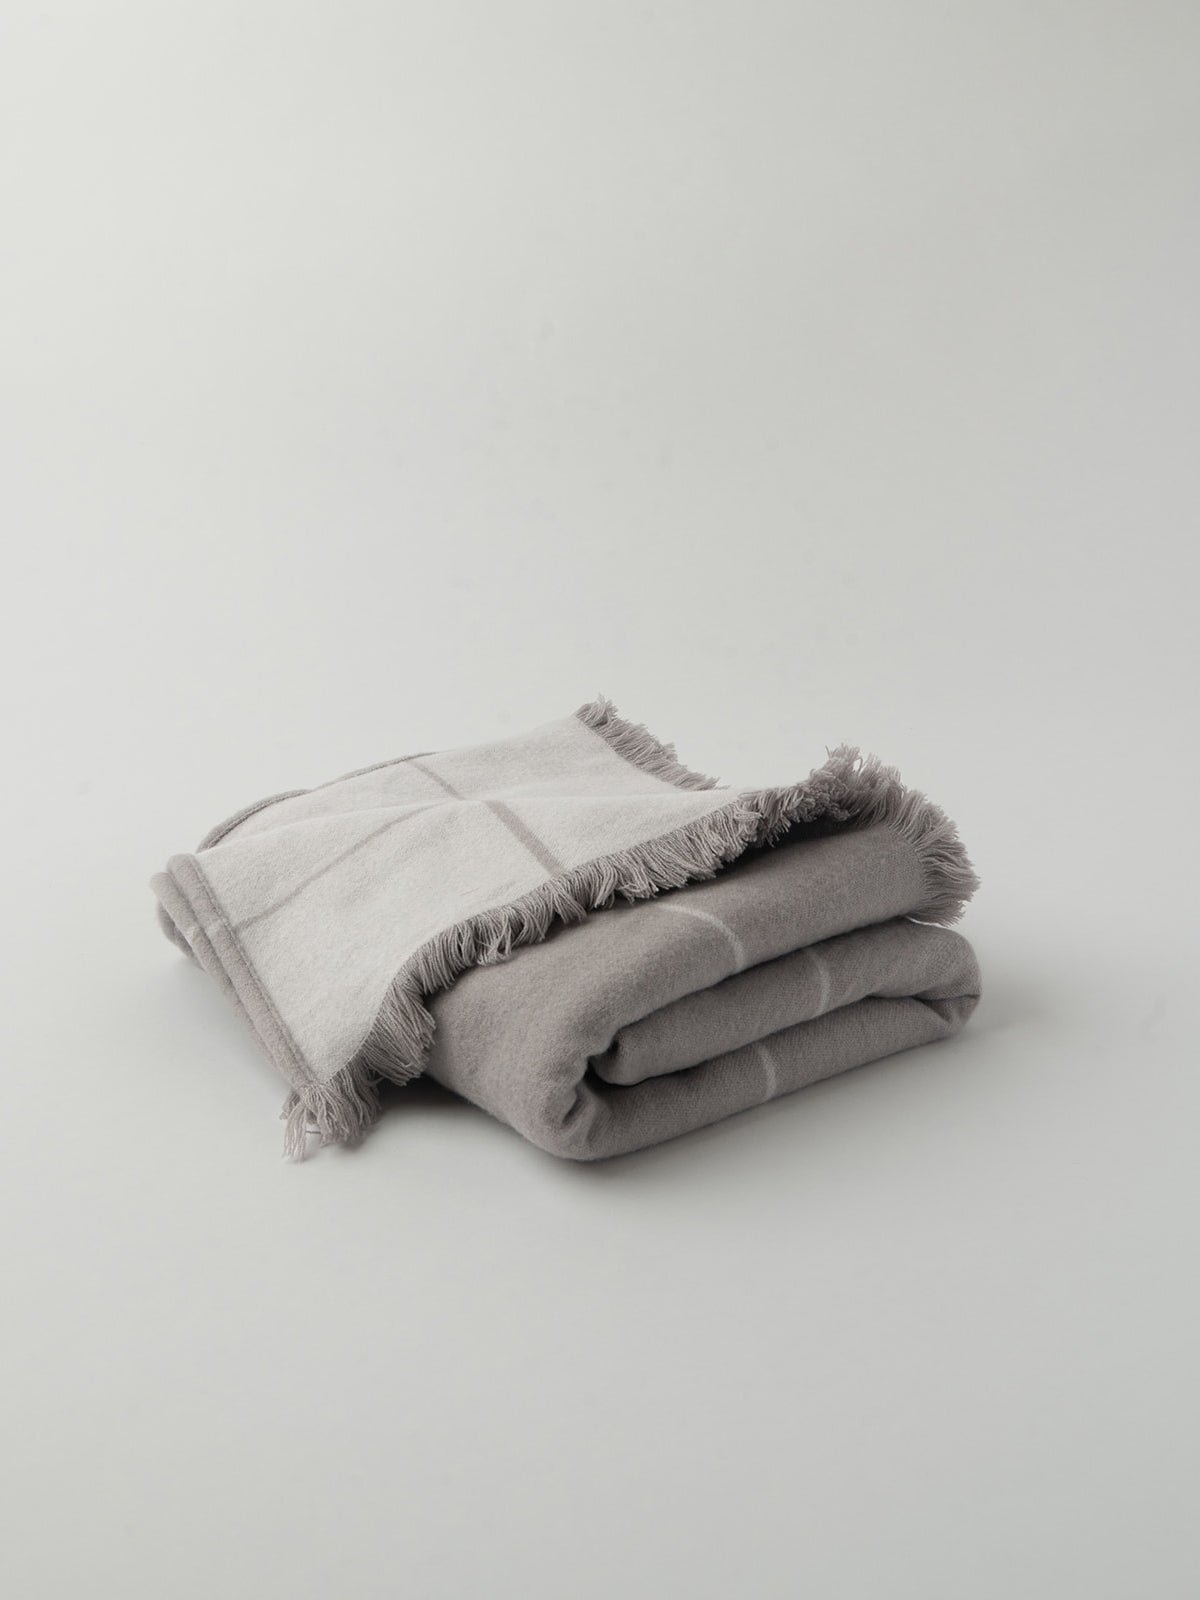 Grey windowpane blanket half folded showing tasseled edge |Color:Dove Grey/Light Grey